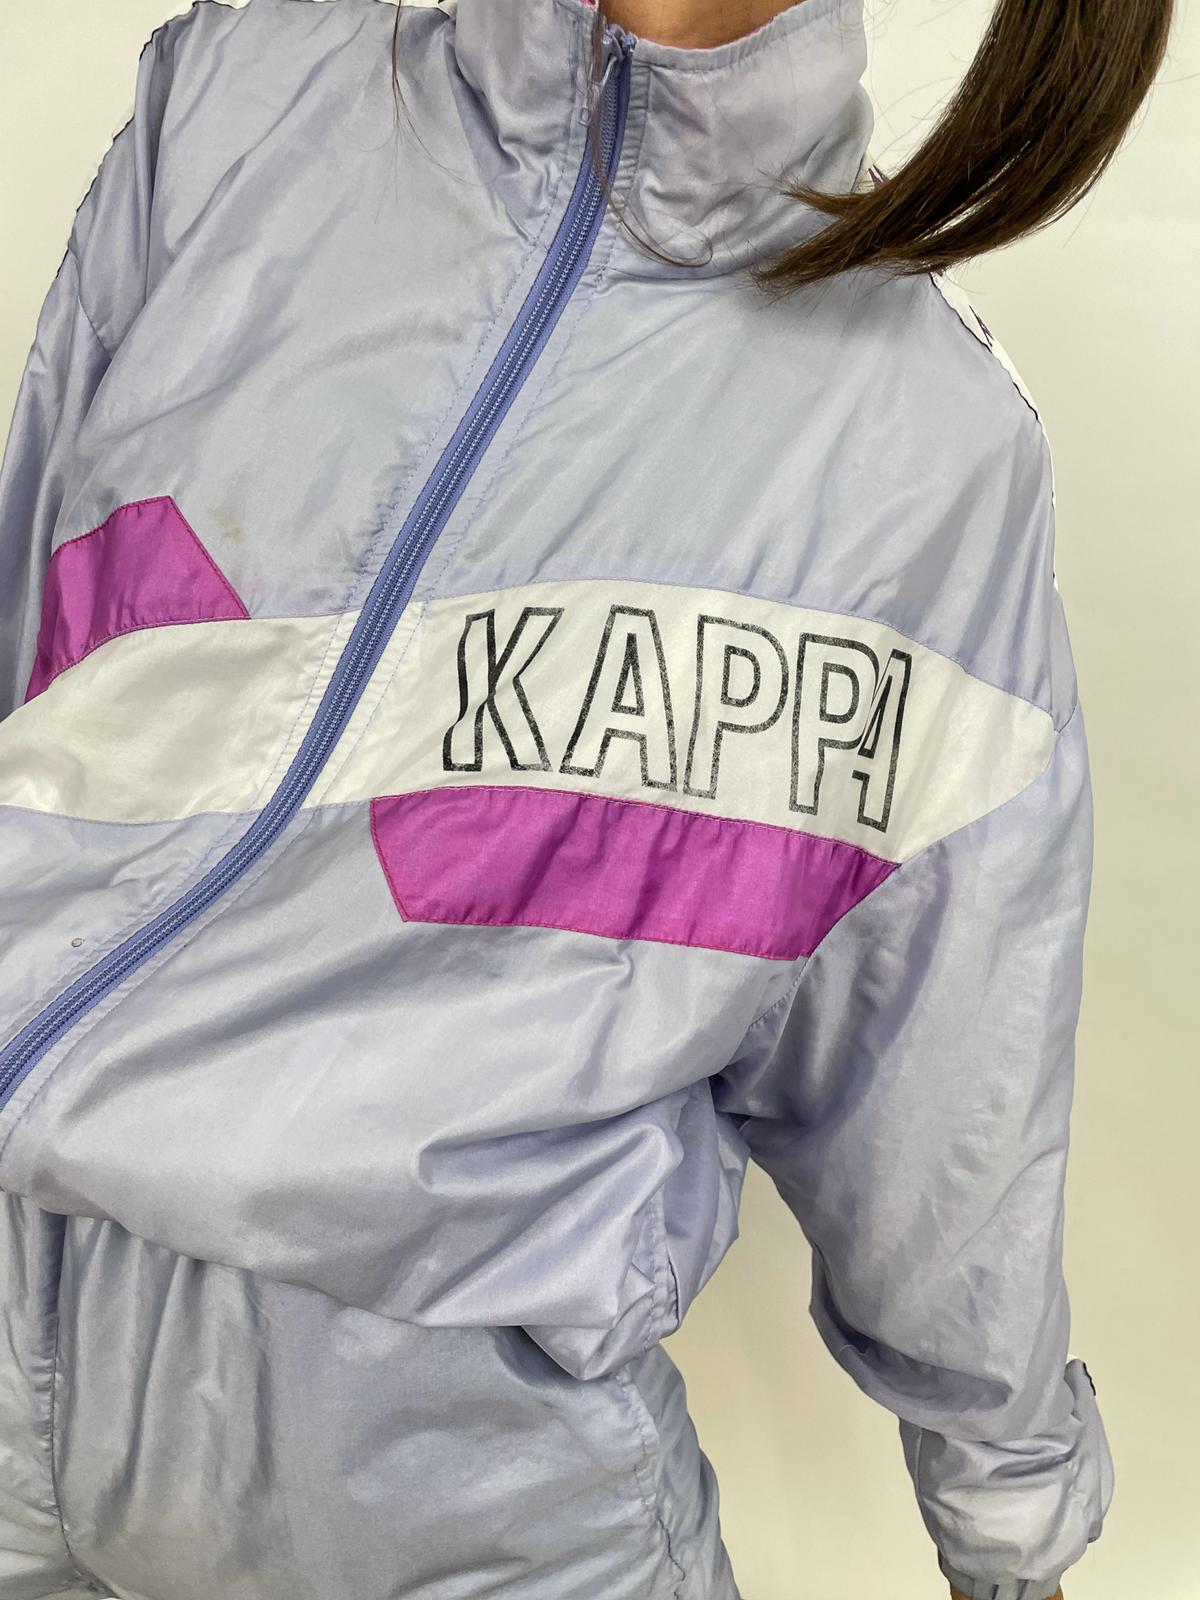 Kappa tracksuit 1990s